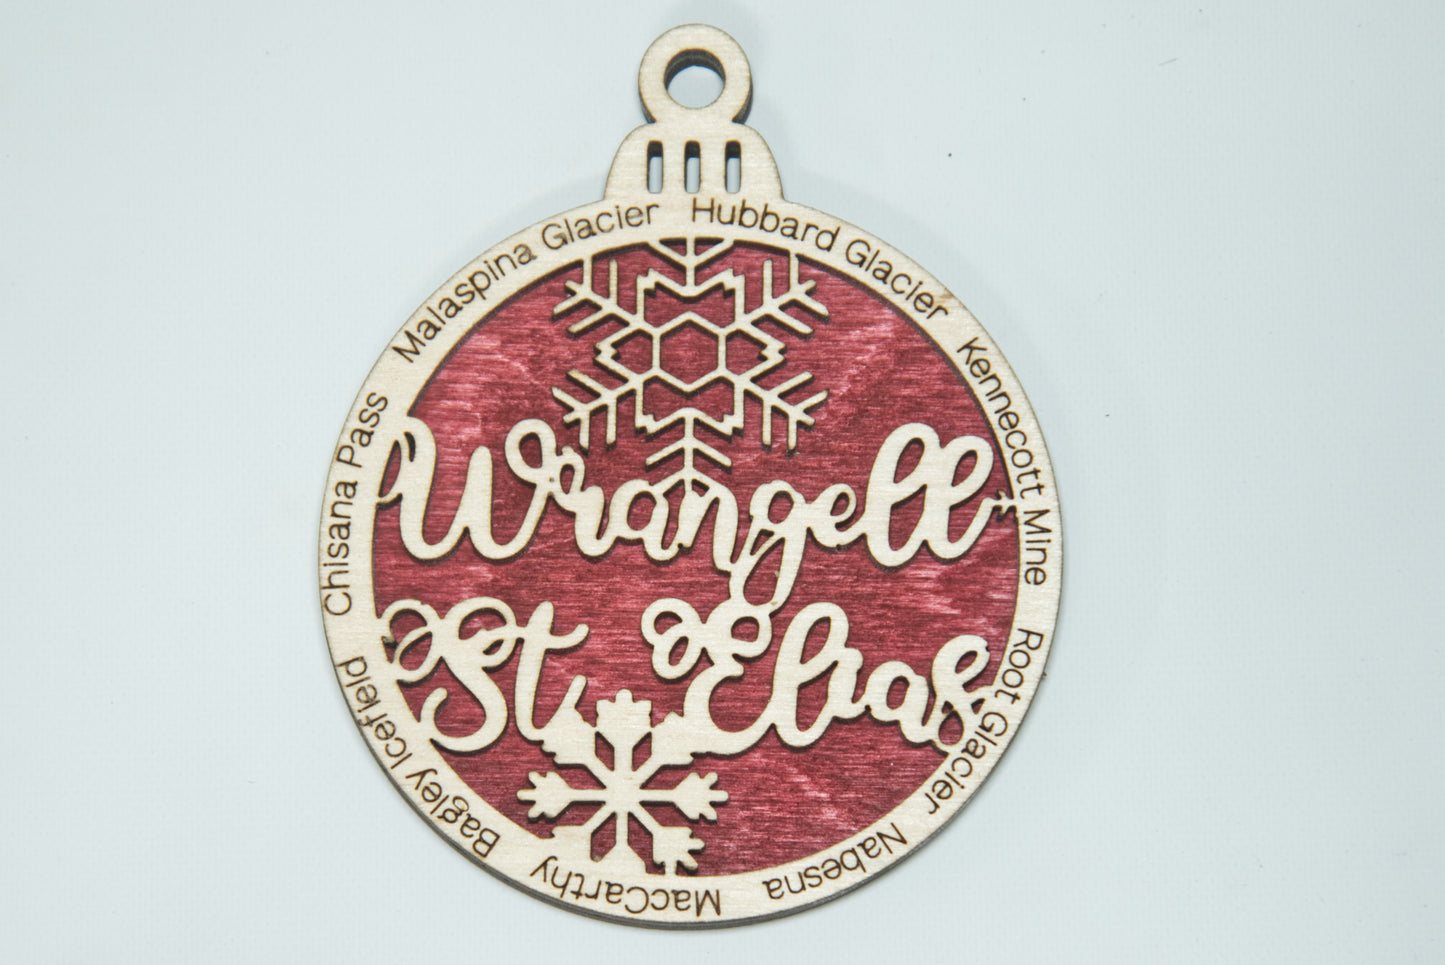 Wrangell - St. Elias National Park Christmas Ornament